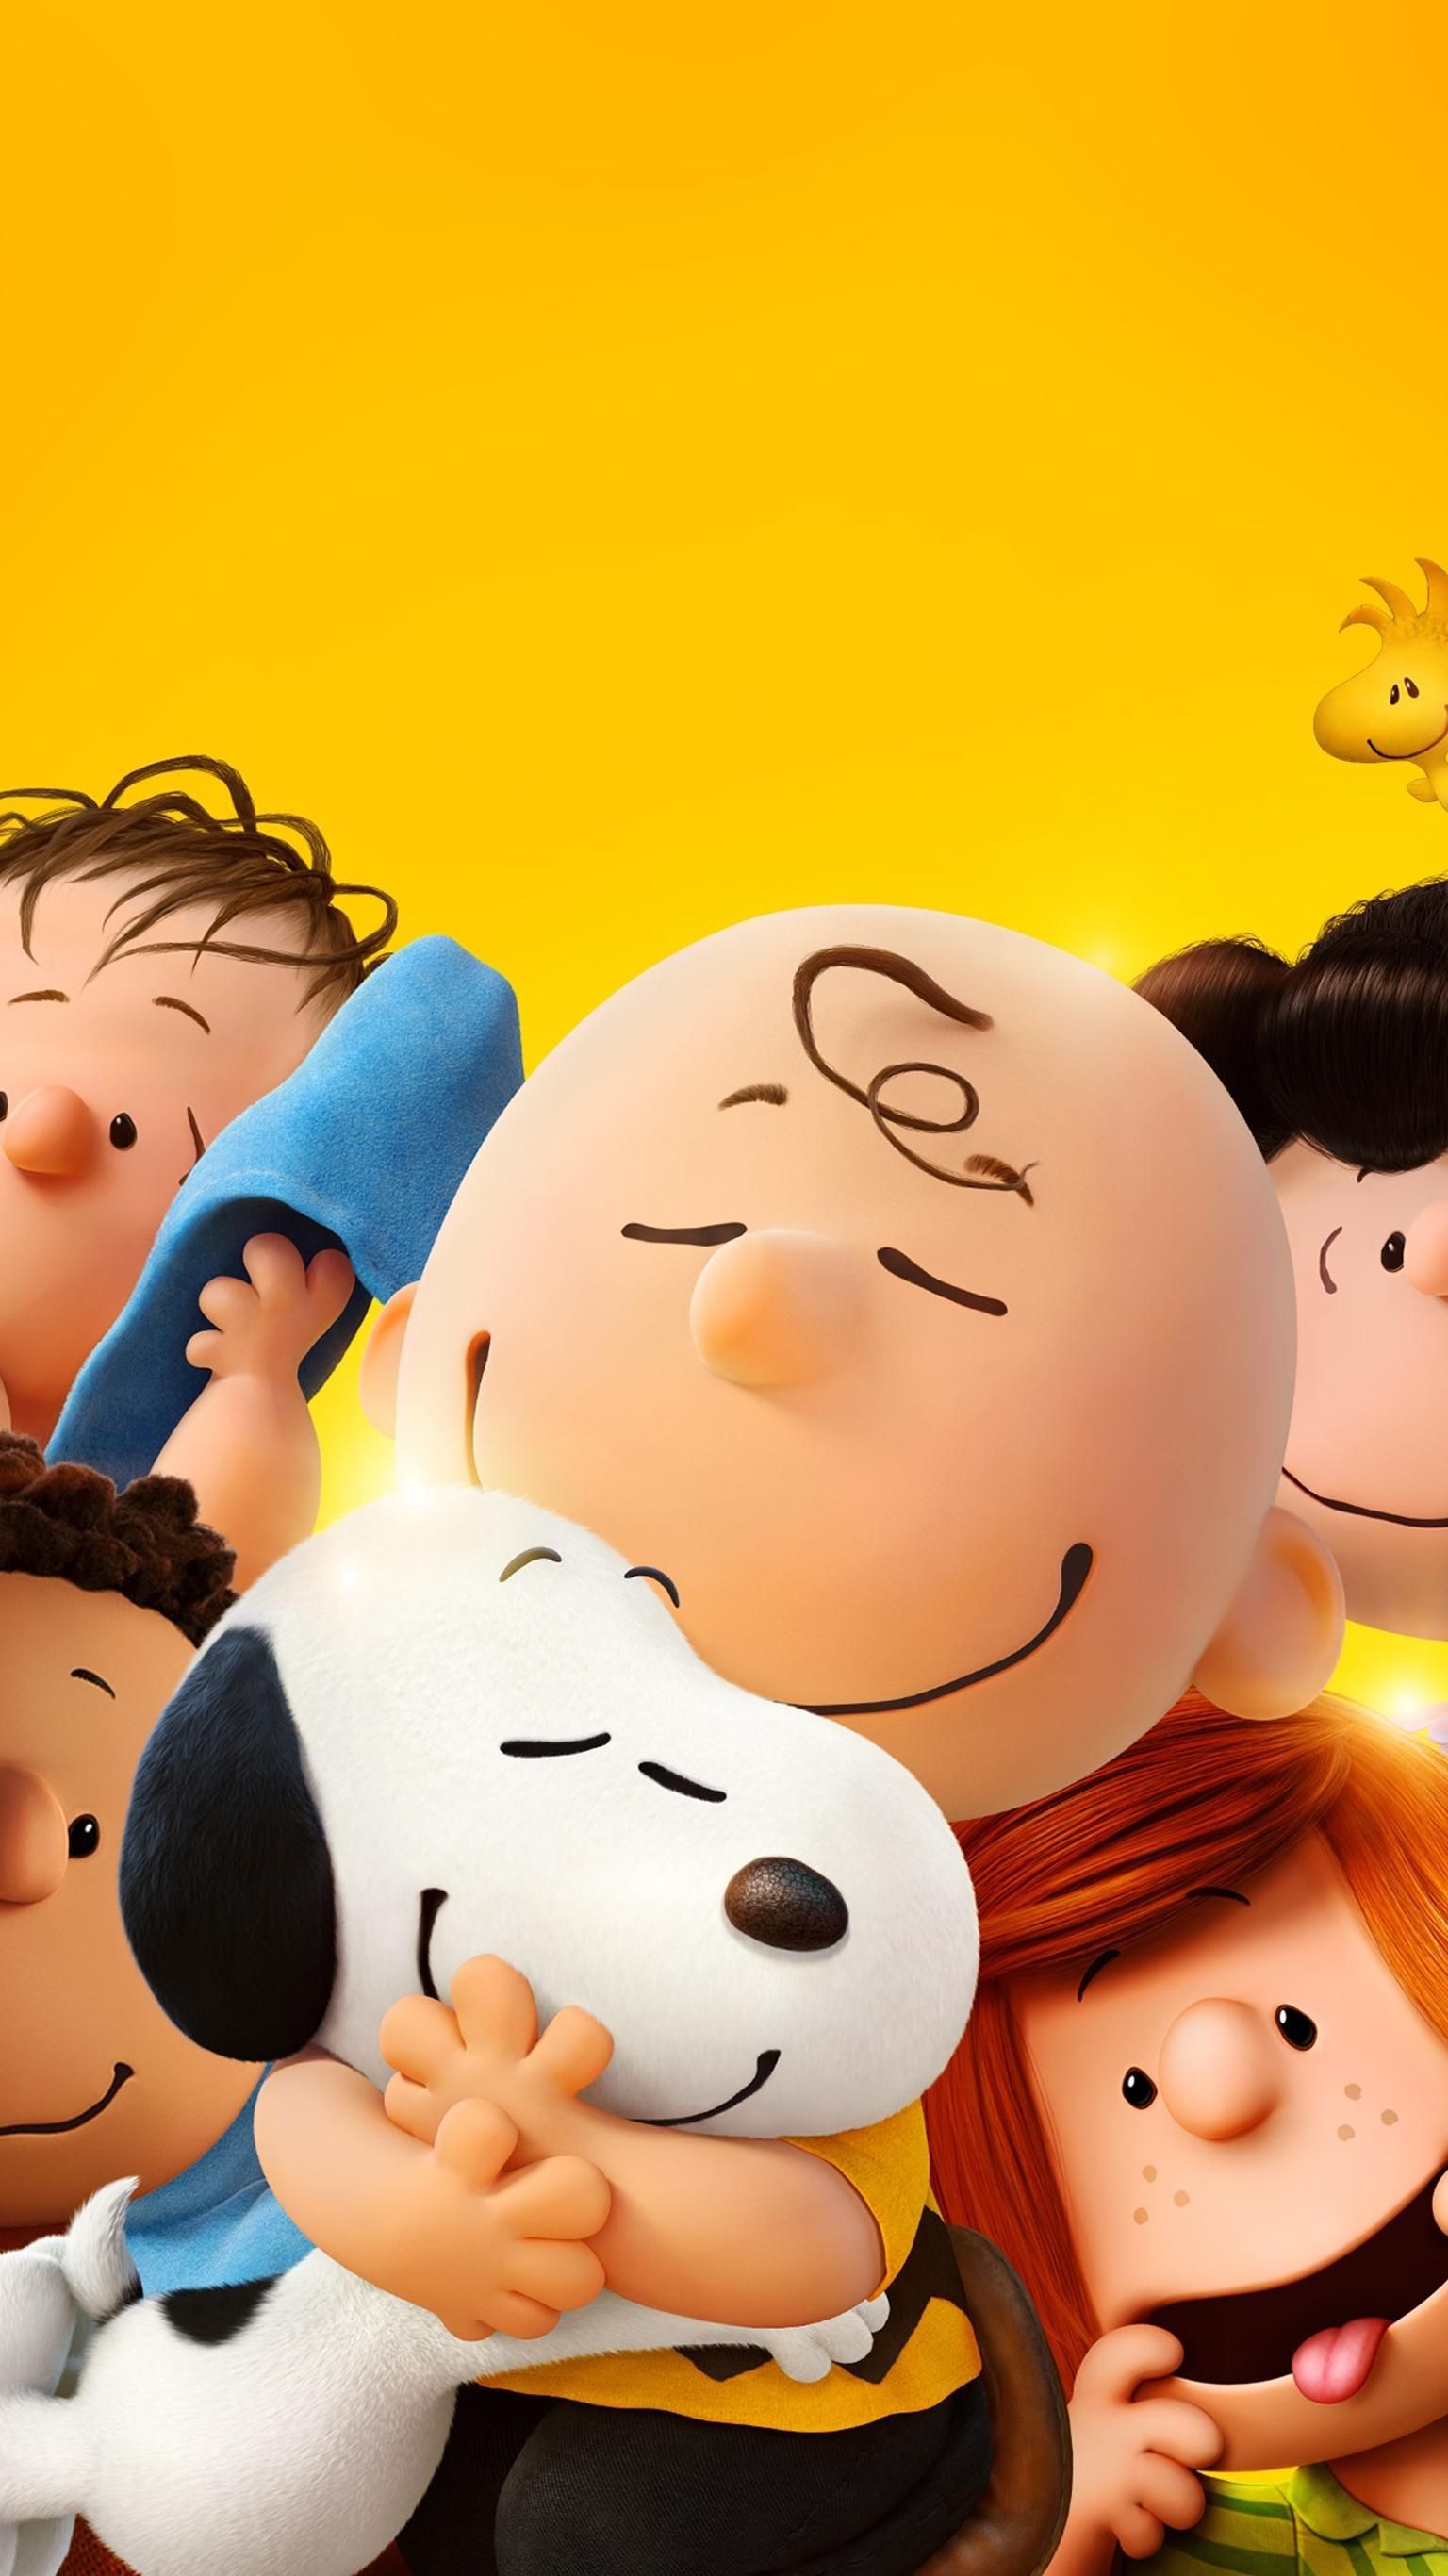 The Peanuts Movie (2015) Phone Wallpaper. Moviemania. Snoopy wallpaper, Snoopy picture, Peanuts wallpaper